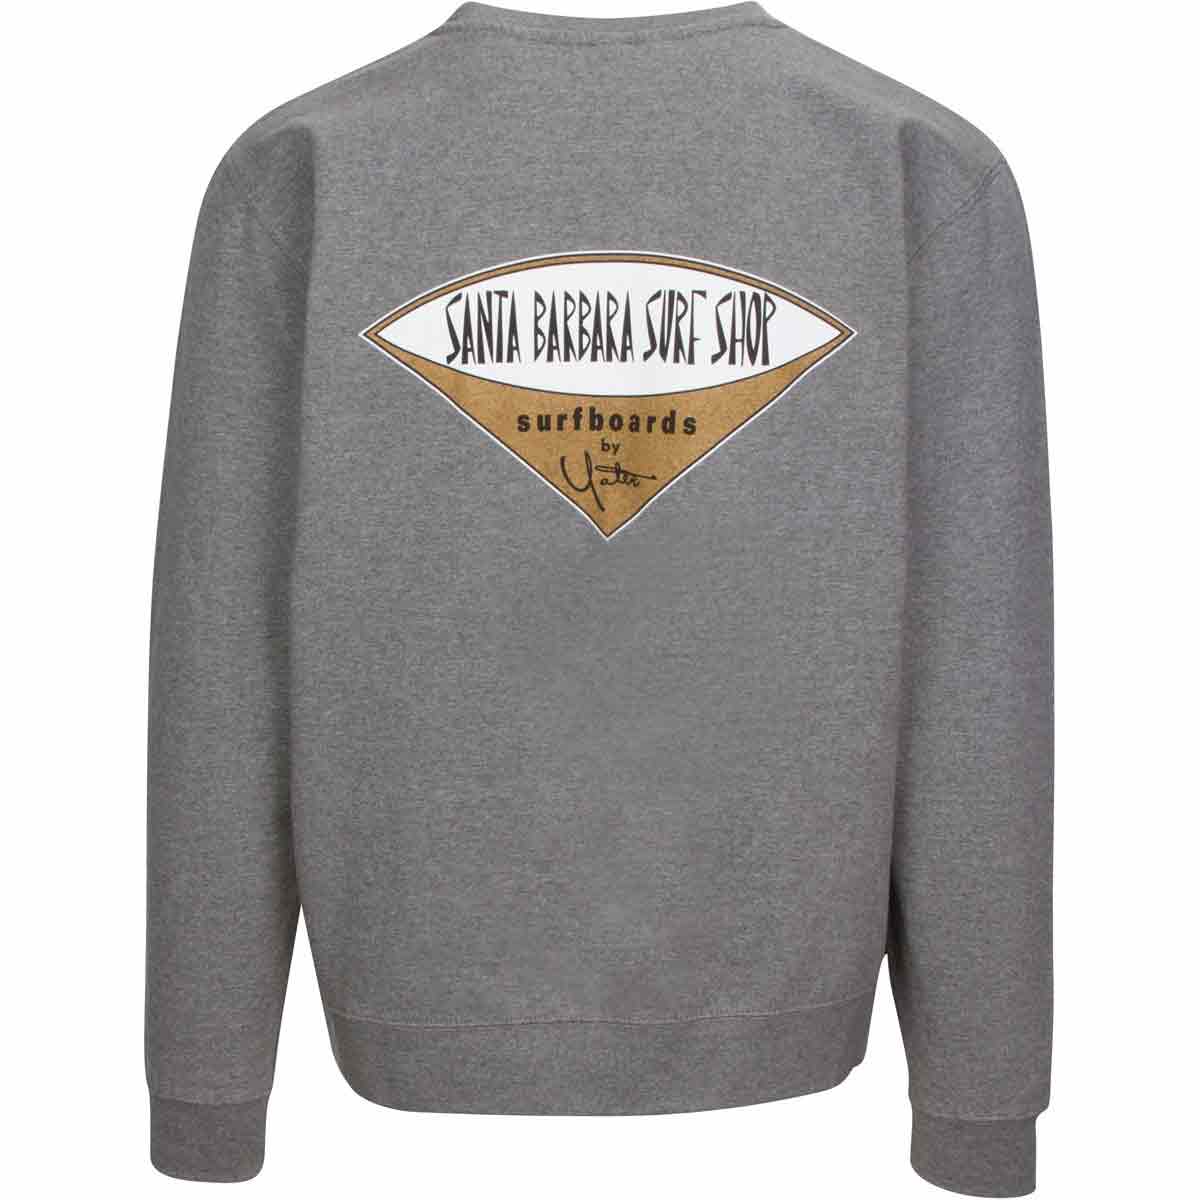 Crew Neck Sweatshirt with Santa Barbara Surf Shop Logo - Surf N' Wear Beach House Online